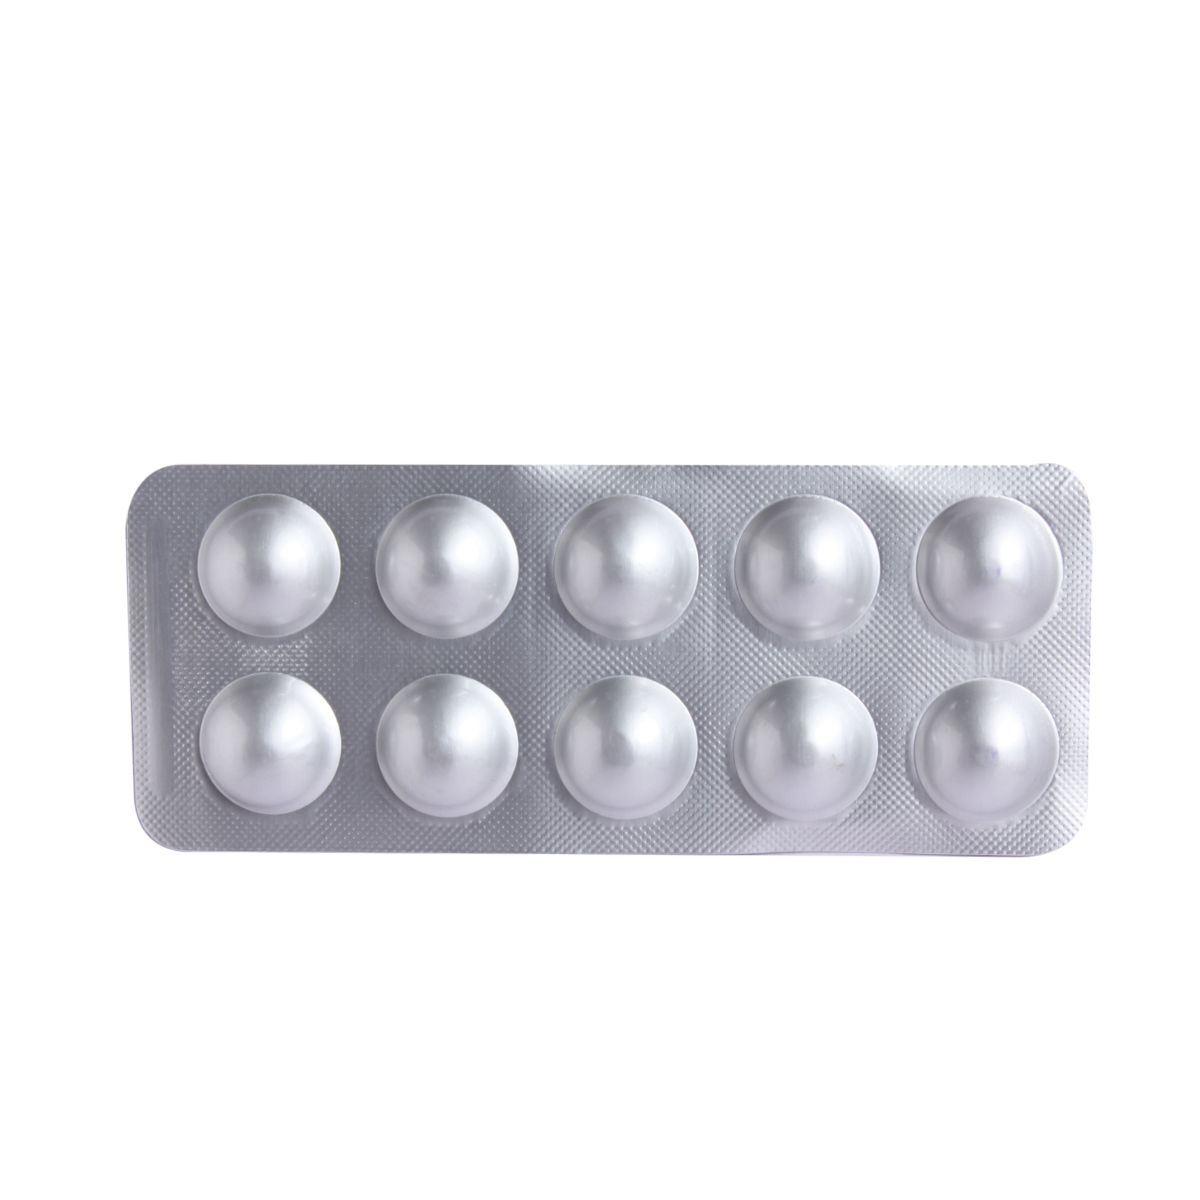 Buy Ethomid 250 mg Tablet 10's Online